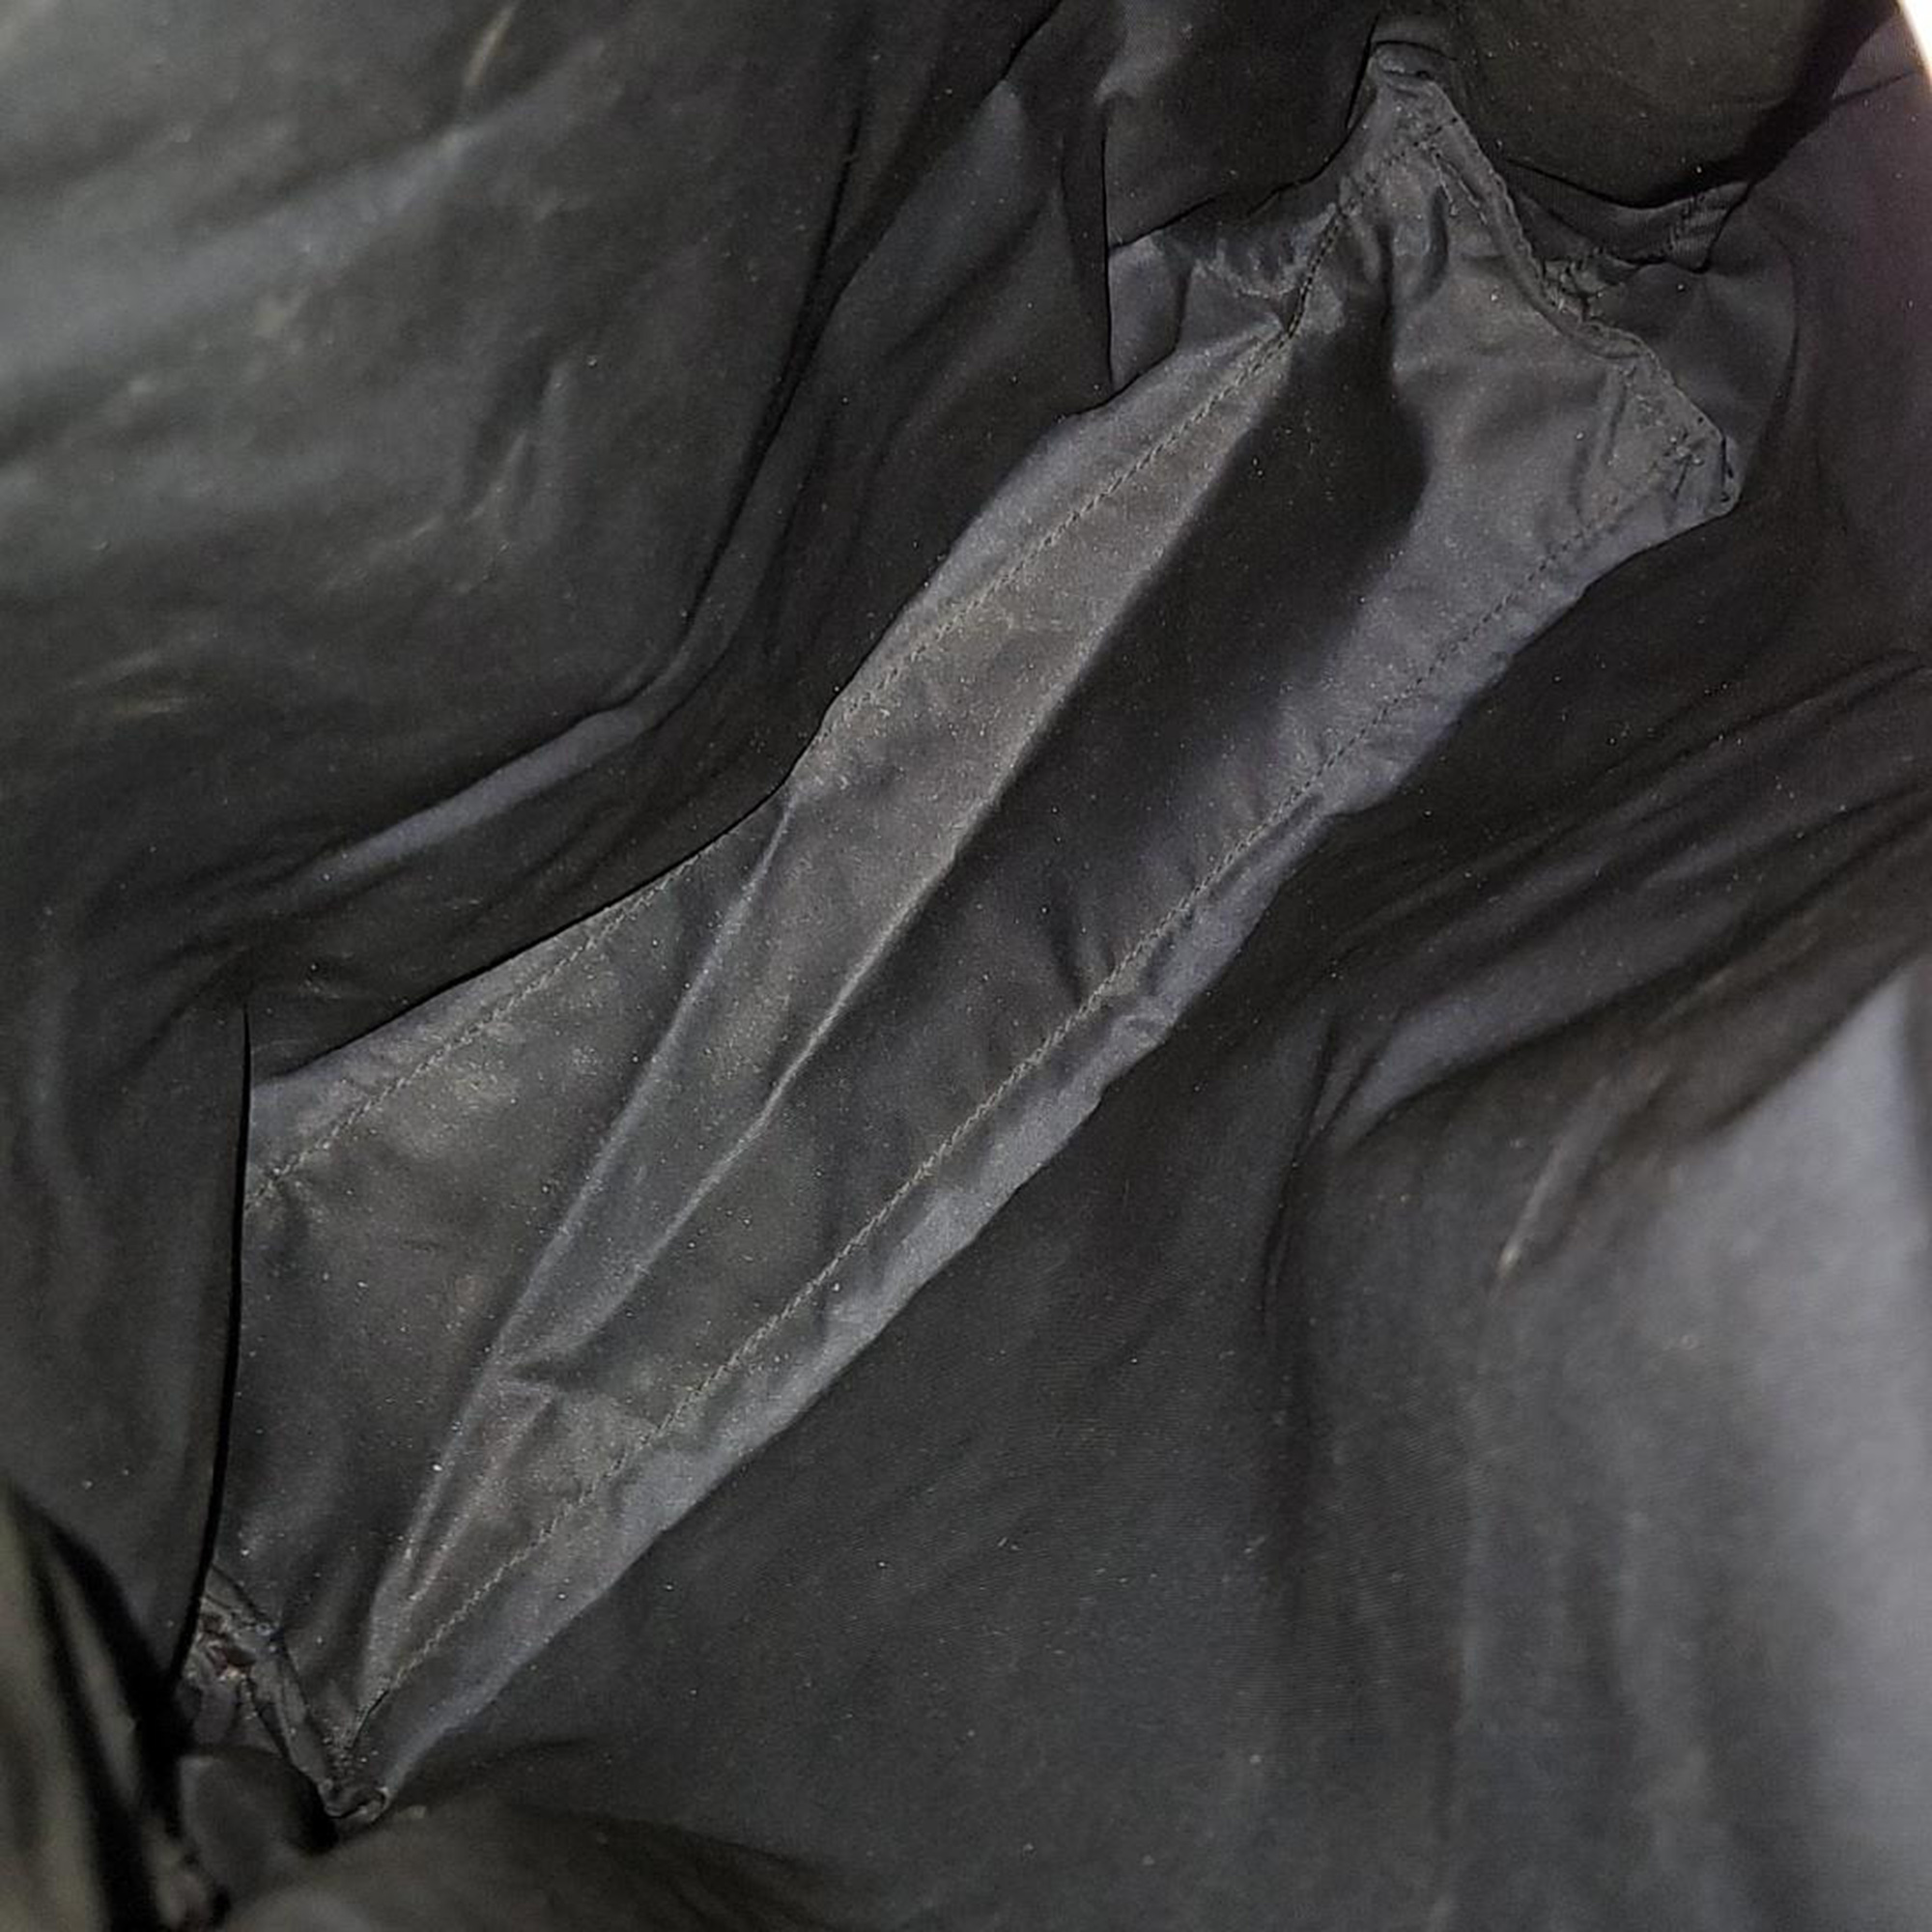 Prada Navy Blue Nylon Tote And Shoulder Bag